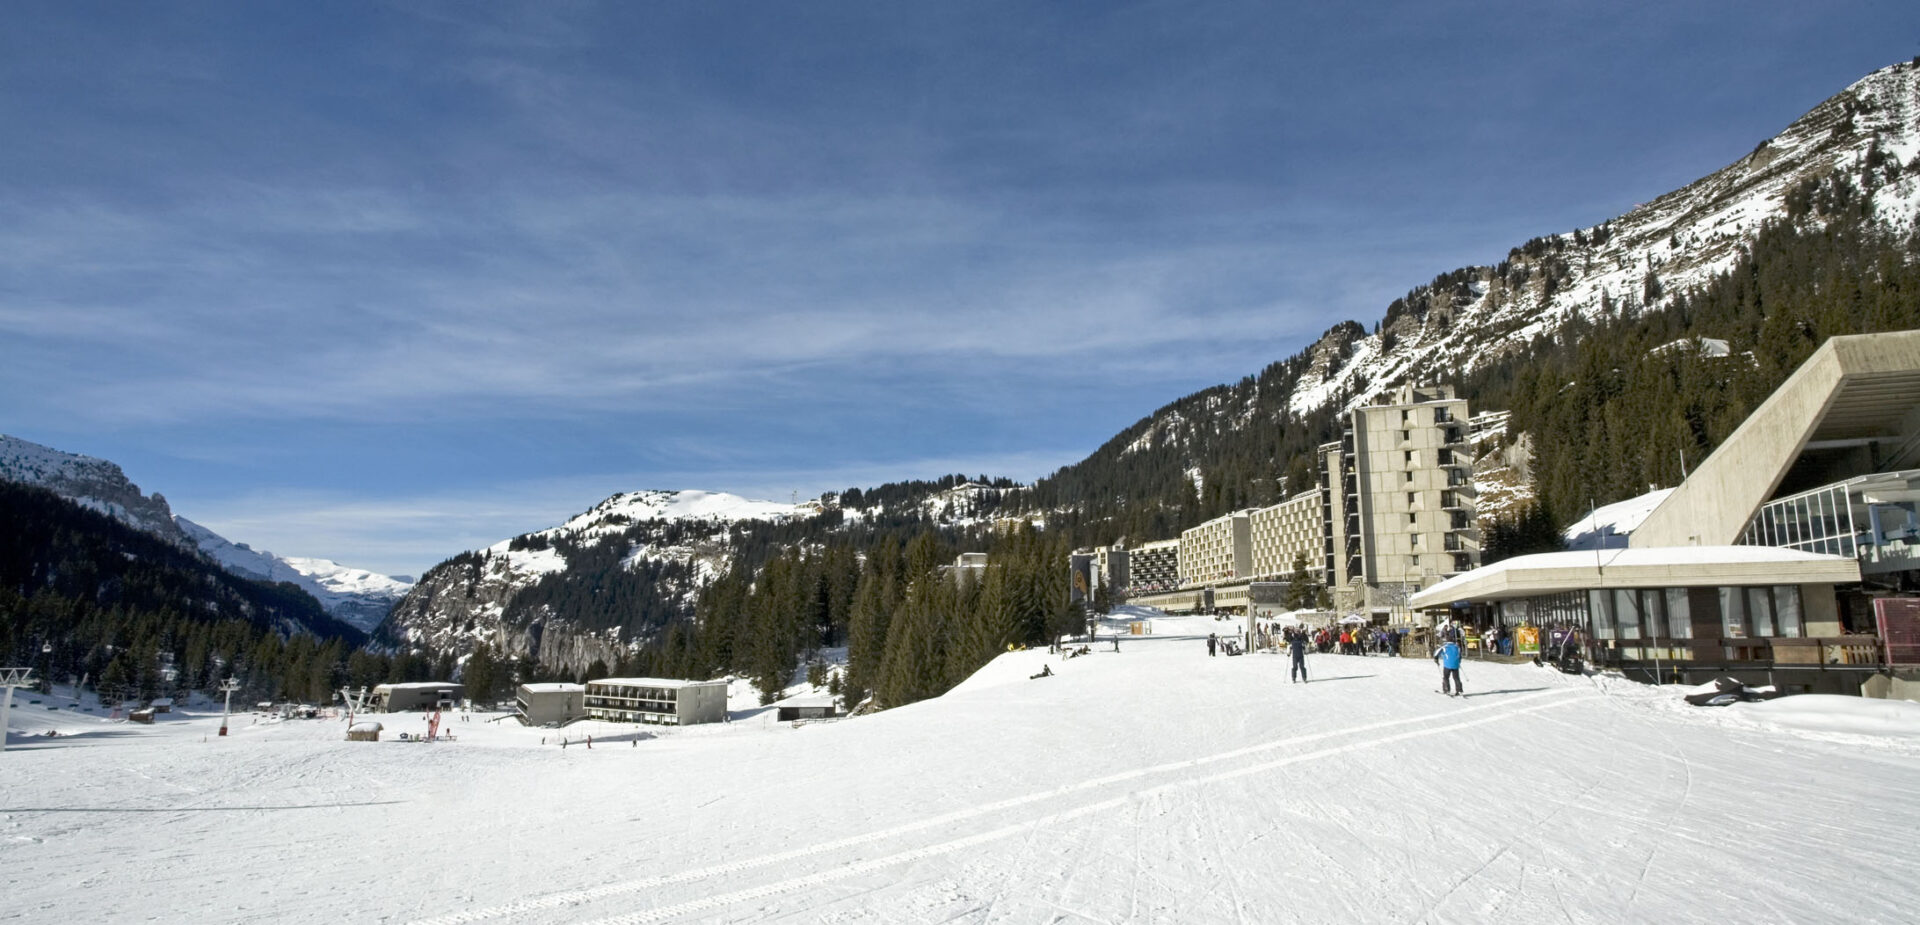 An image of the Flaine ski resort